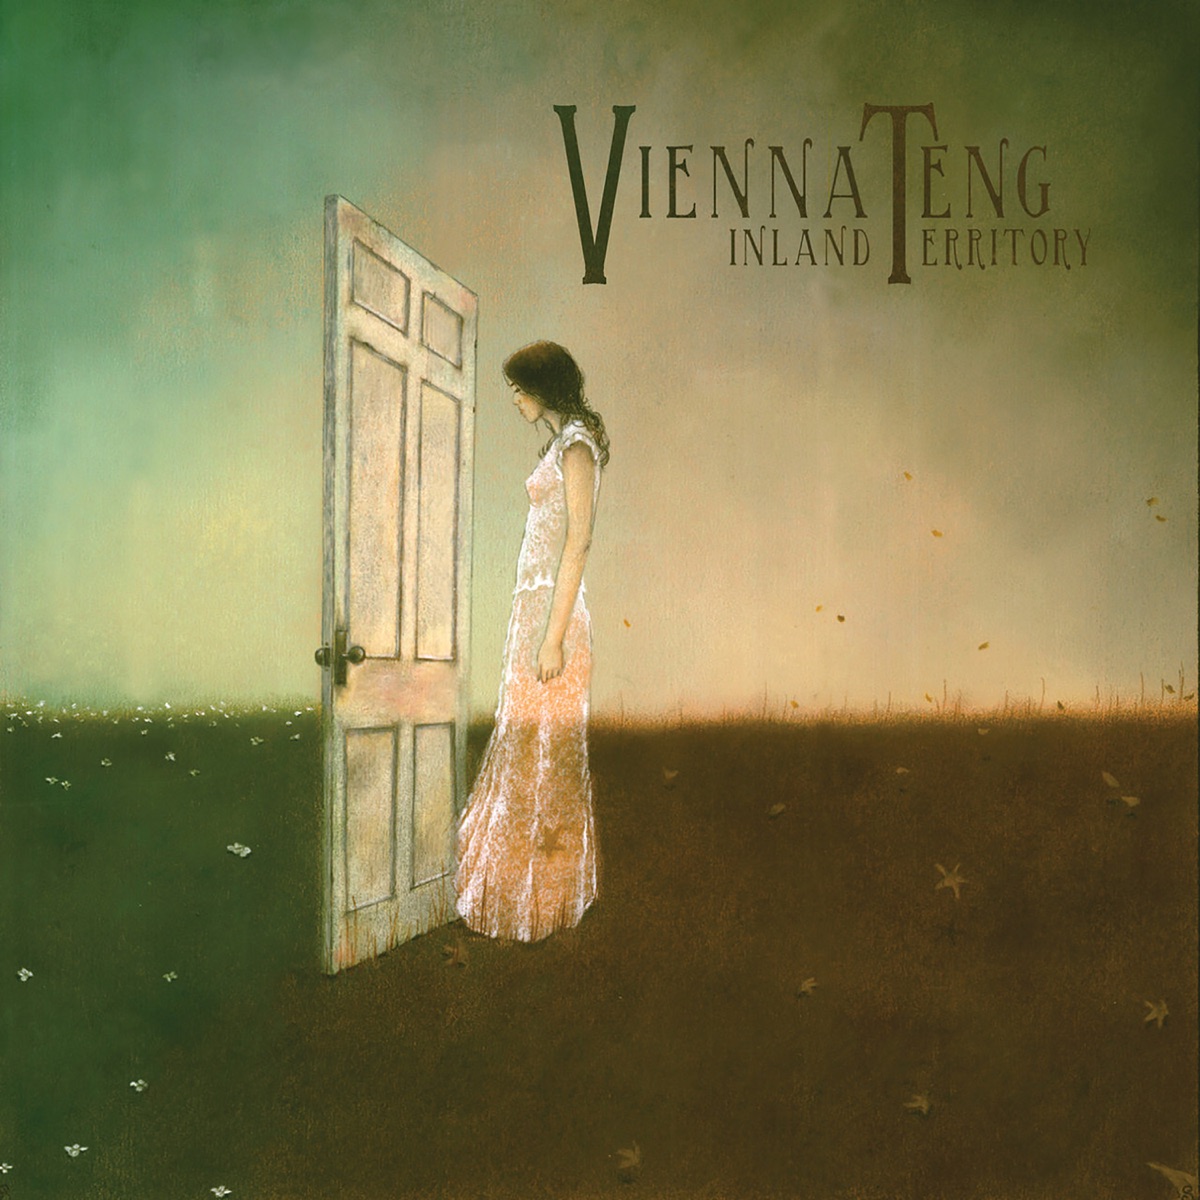 Aims - Album by Vienna Teng - Apple Music